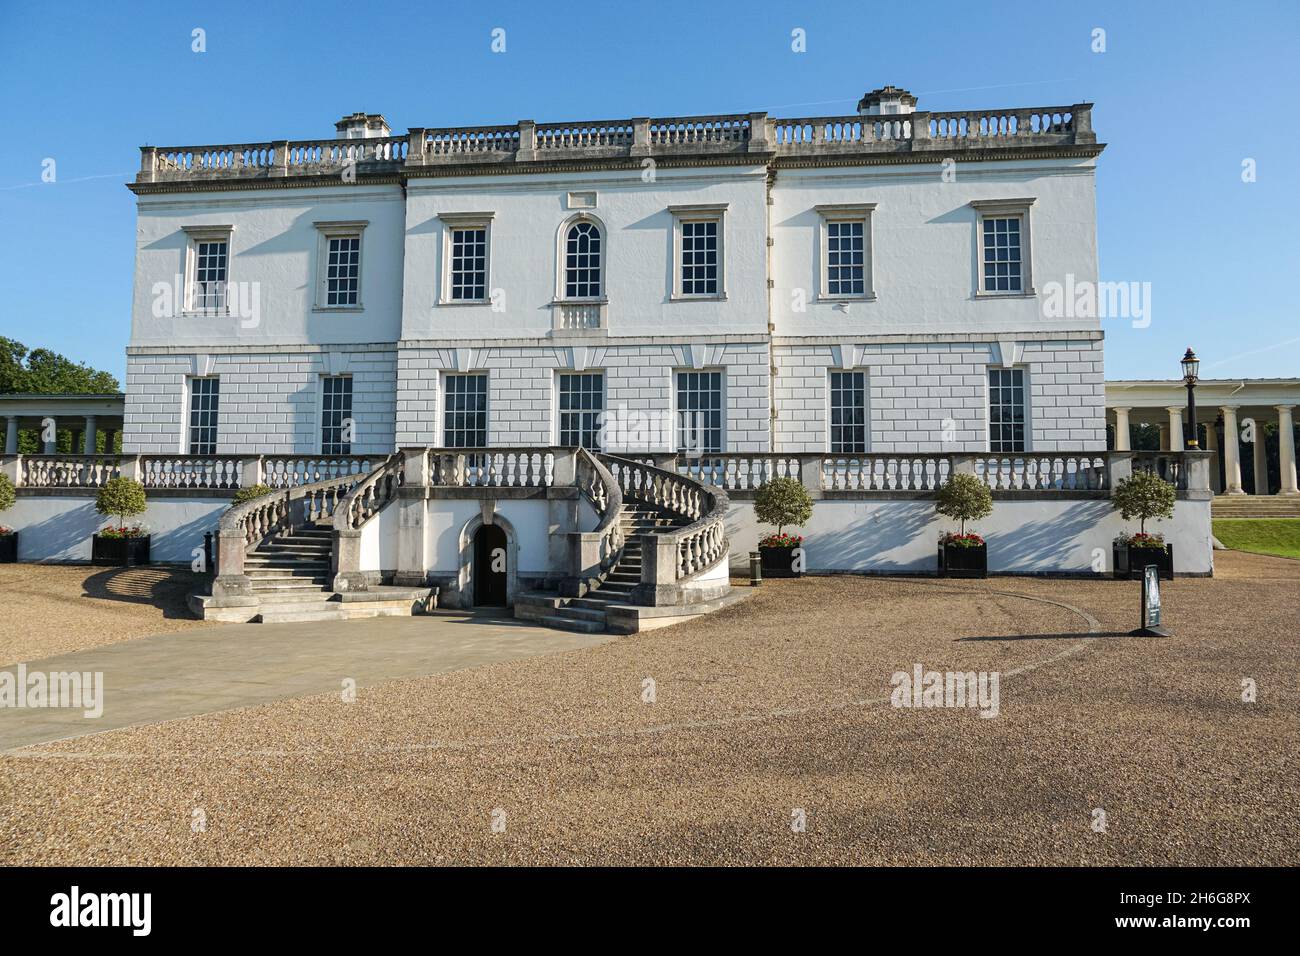 Queen's House, ancienne résidence royale de Greenwich, Londres, Angleterre, Royaume-Uni Banque D'Images